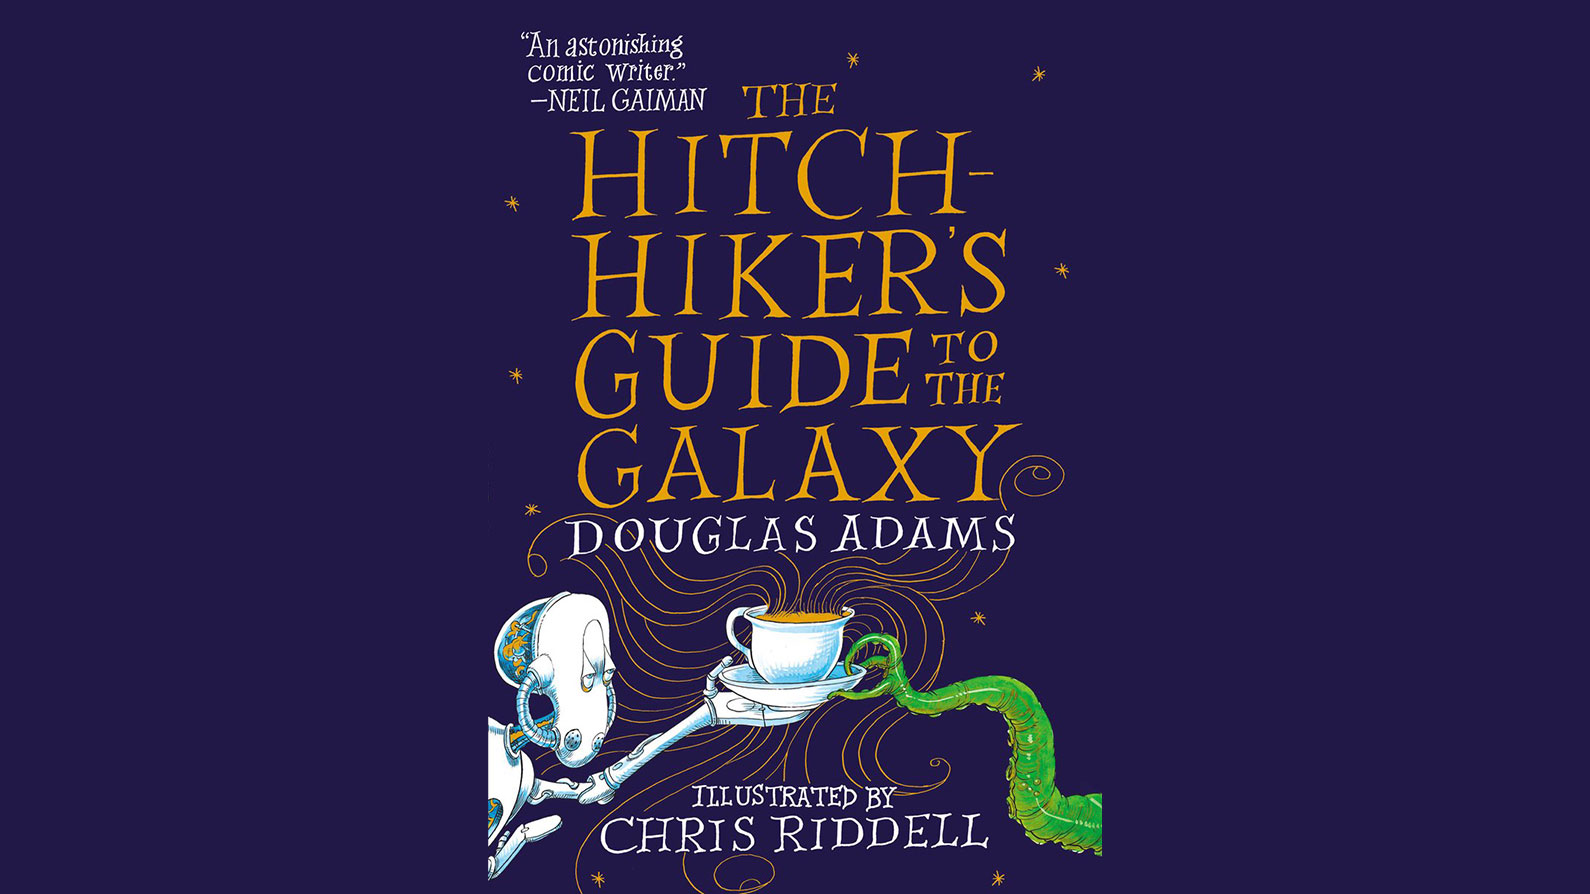 The Hitchhikers Guide To The Galaxy van Douglas Adams boek kaft robot sterren tentakel